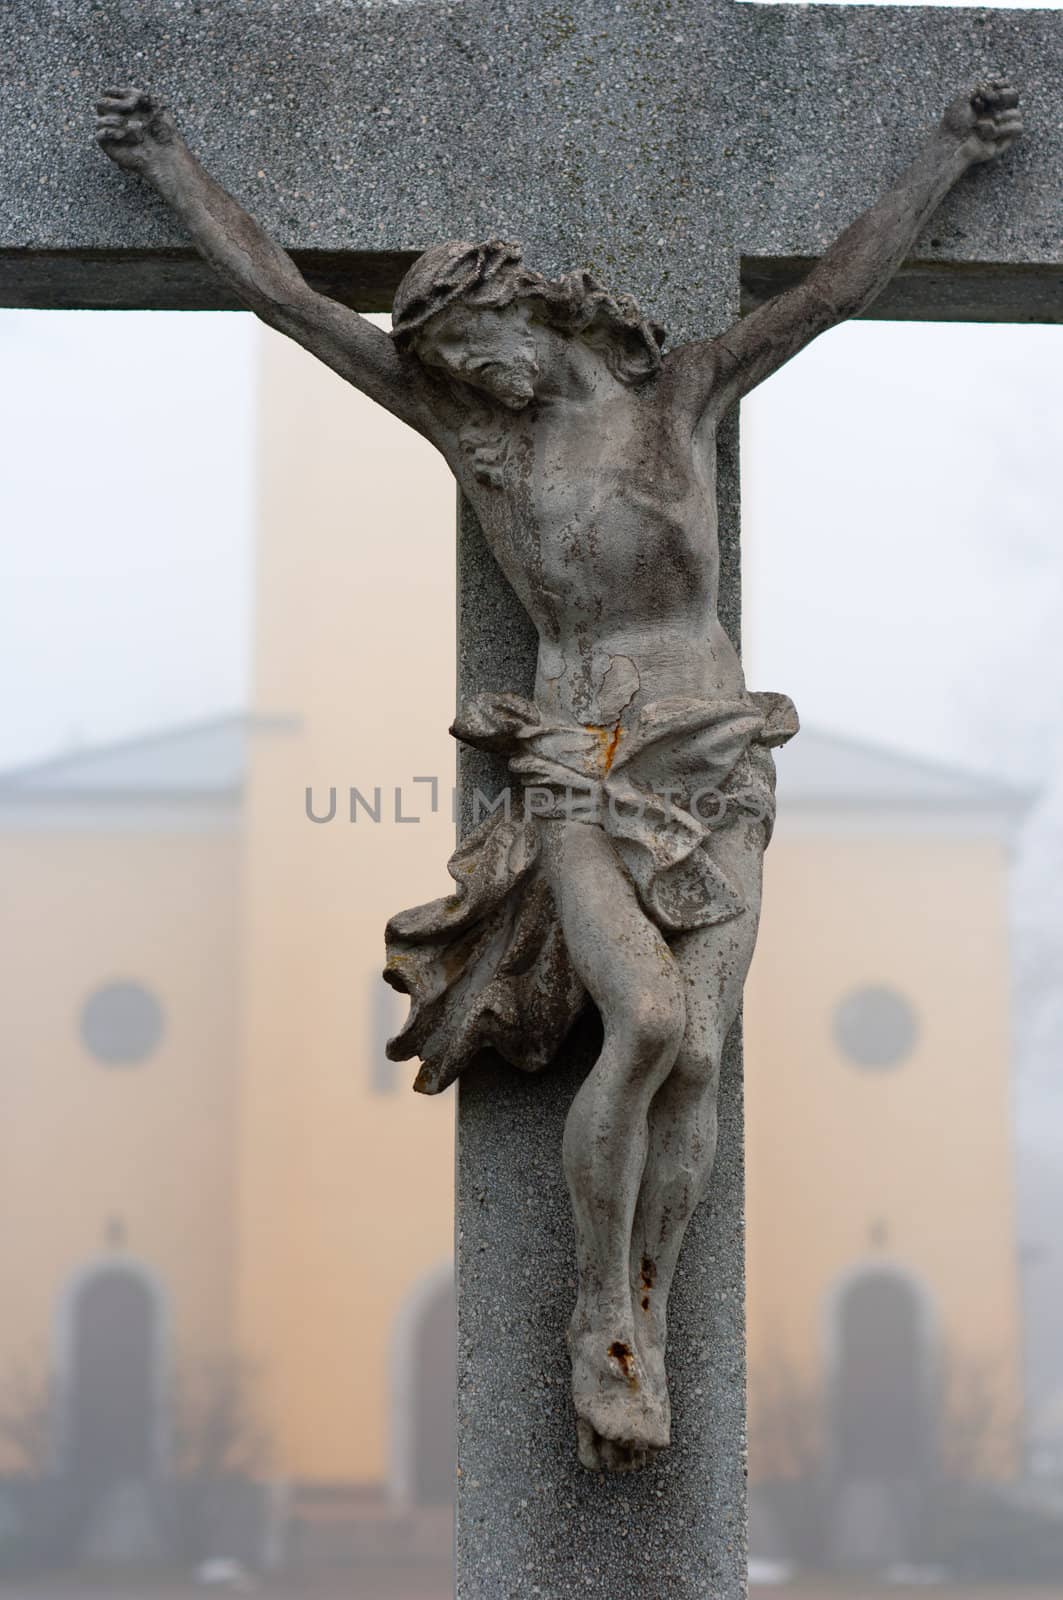 Stone cross with Jesus Christ crucifixion